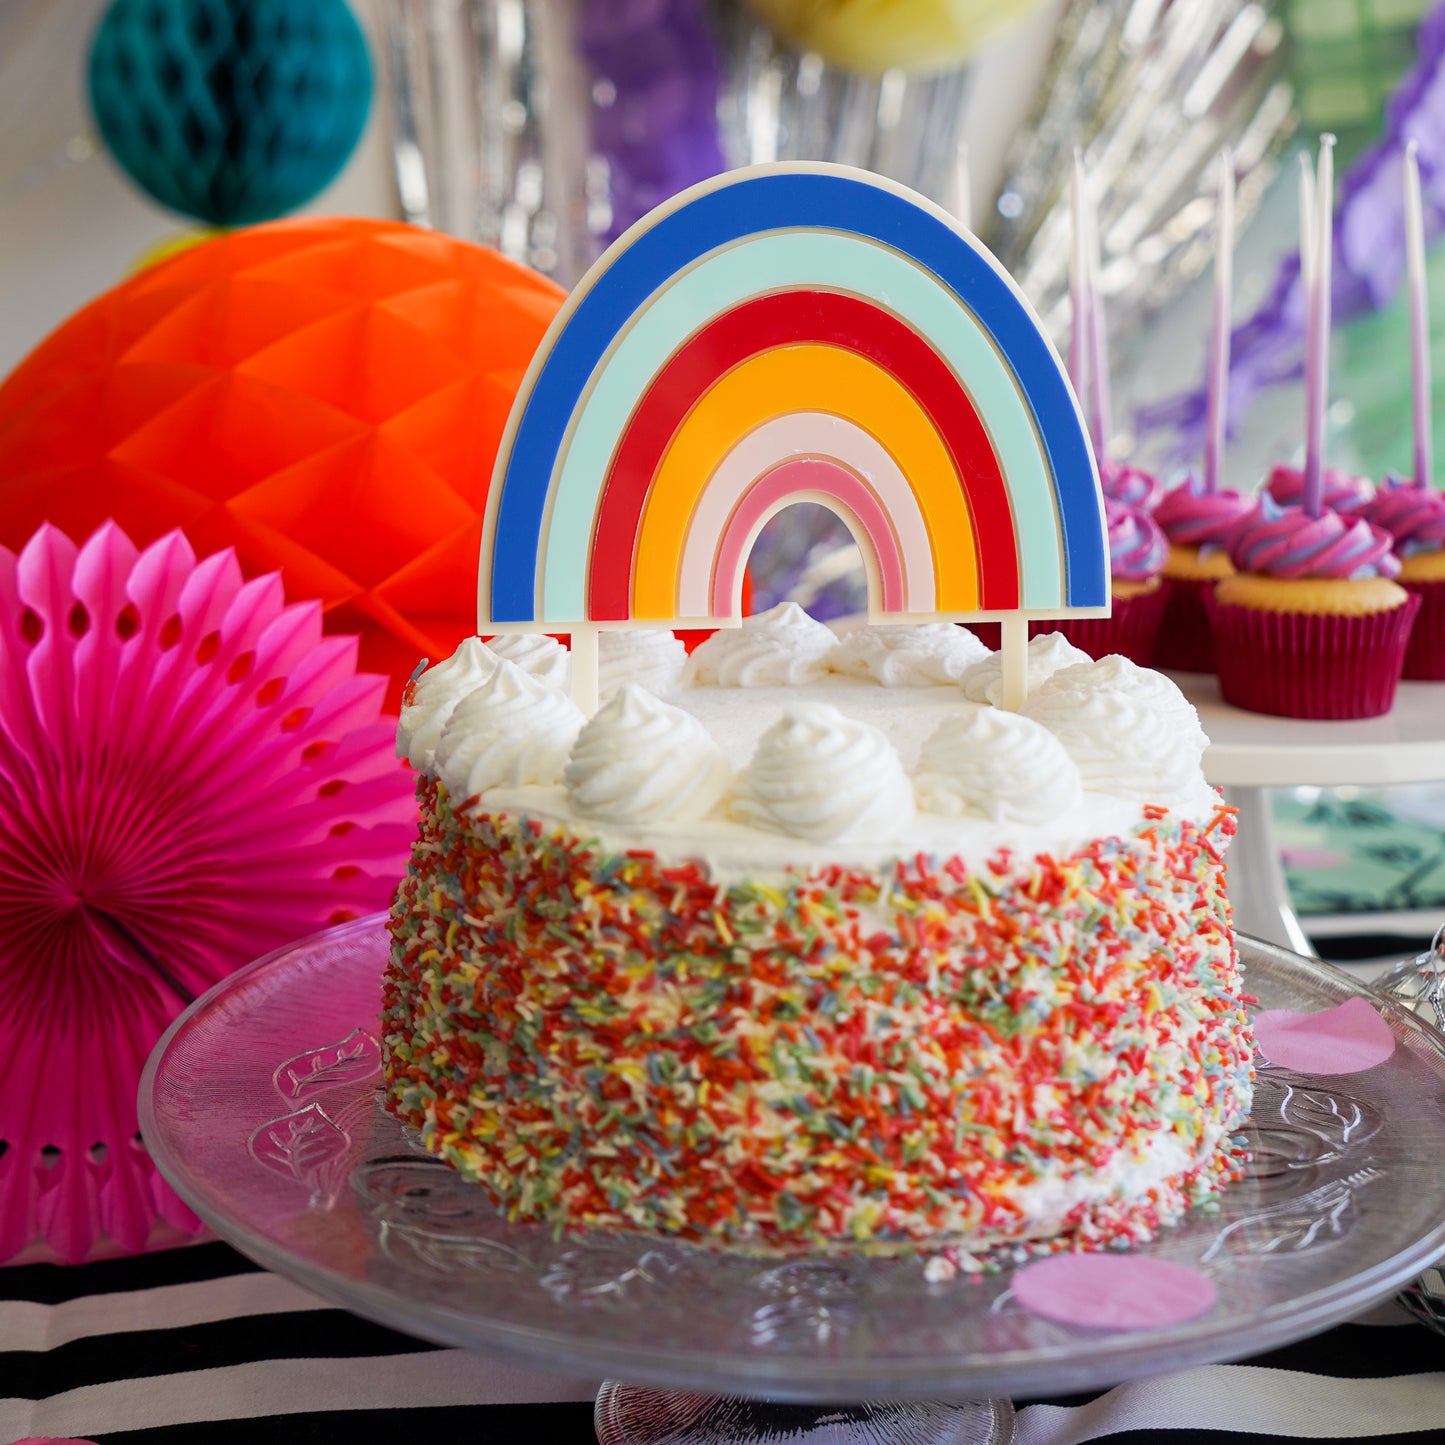 Cake Topper - Rainbow